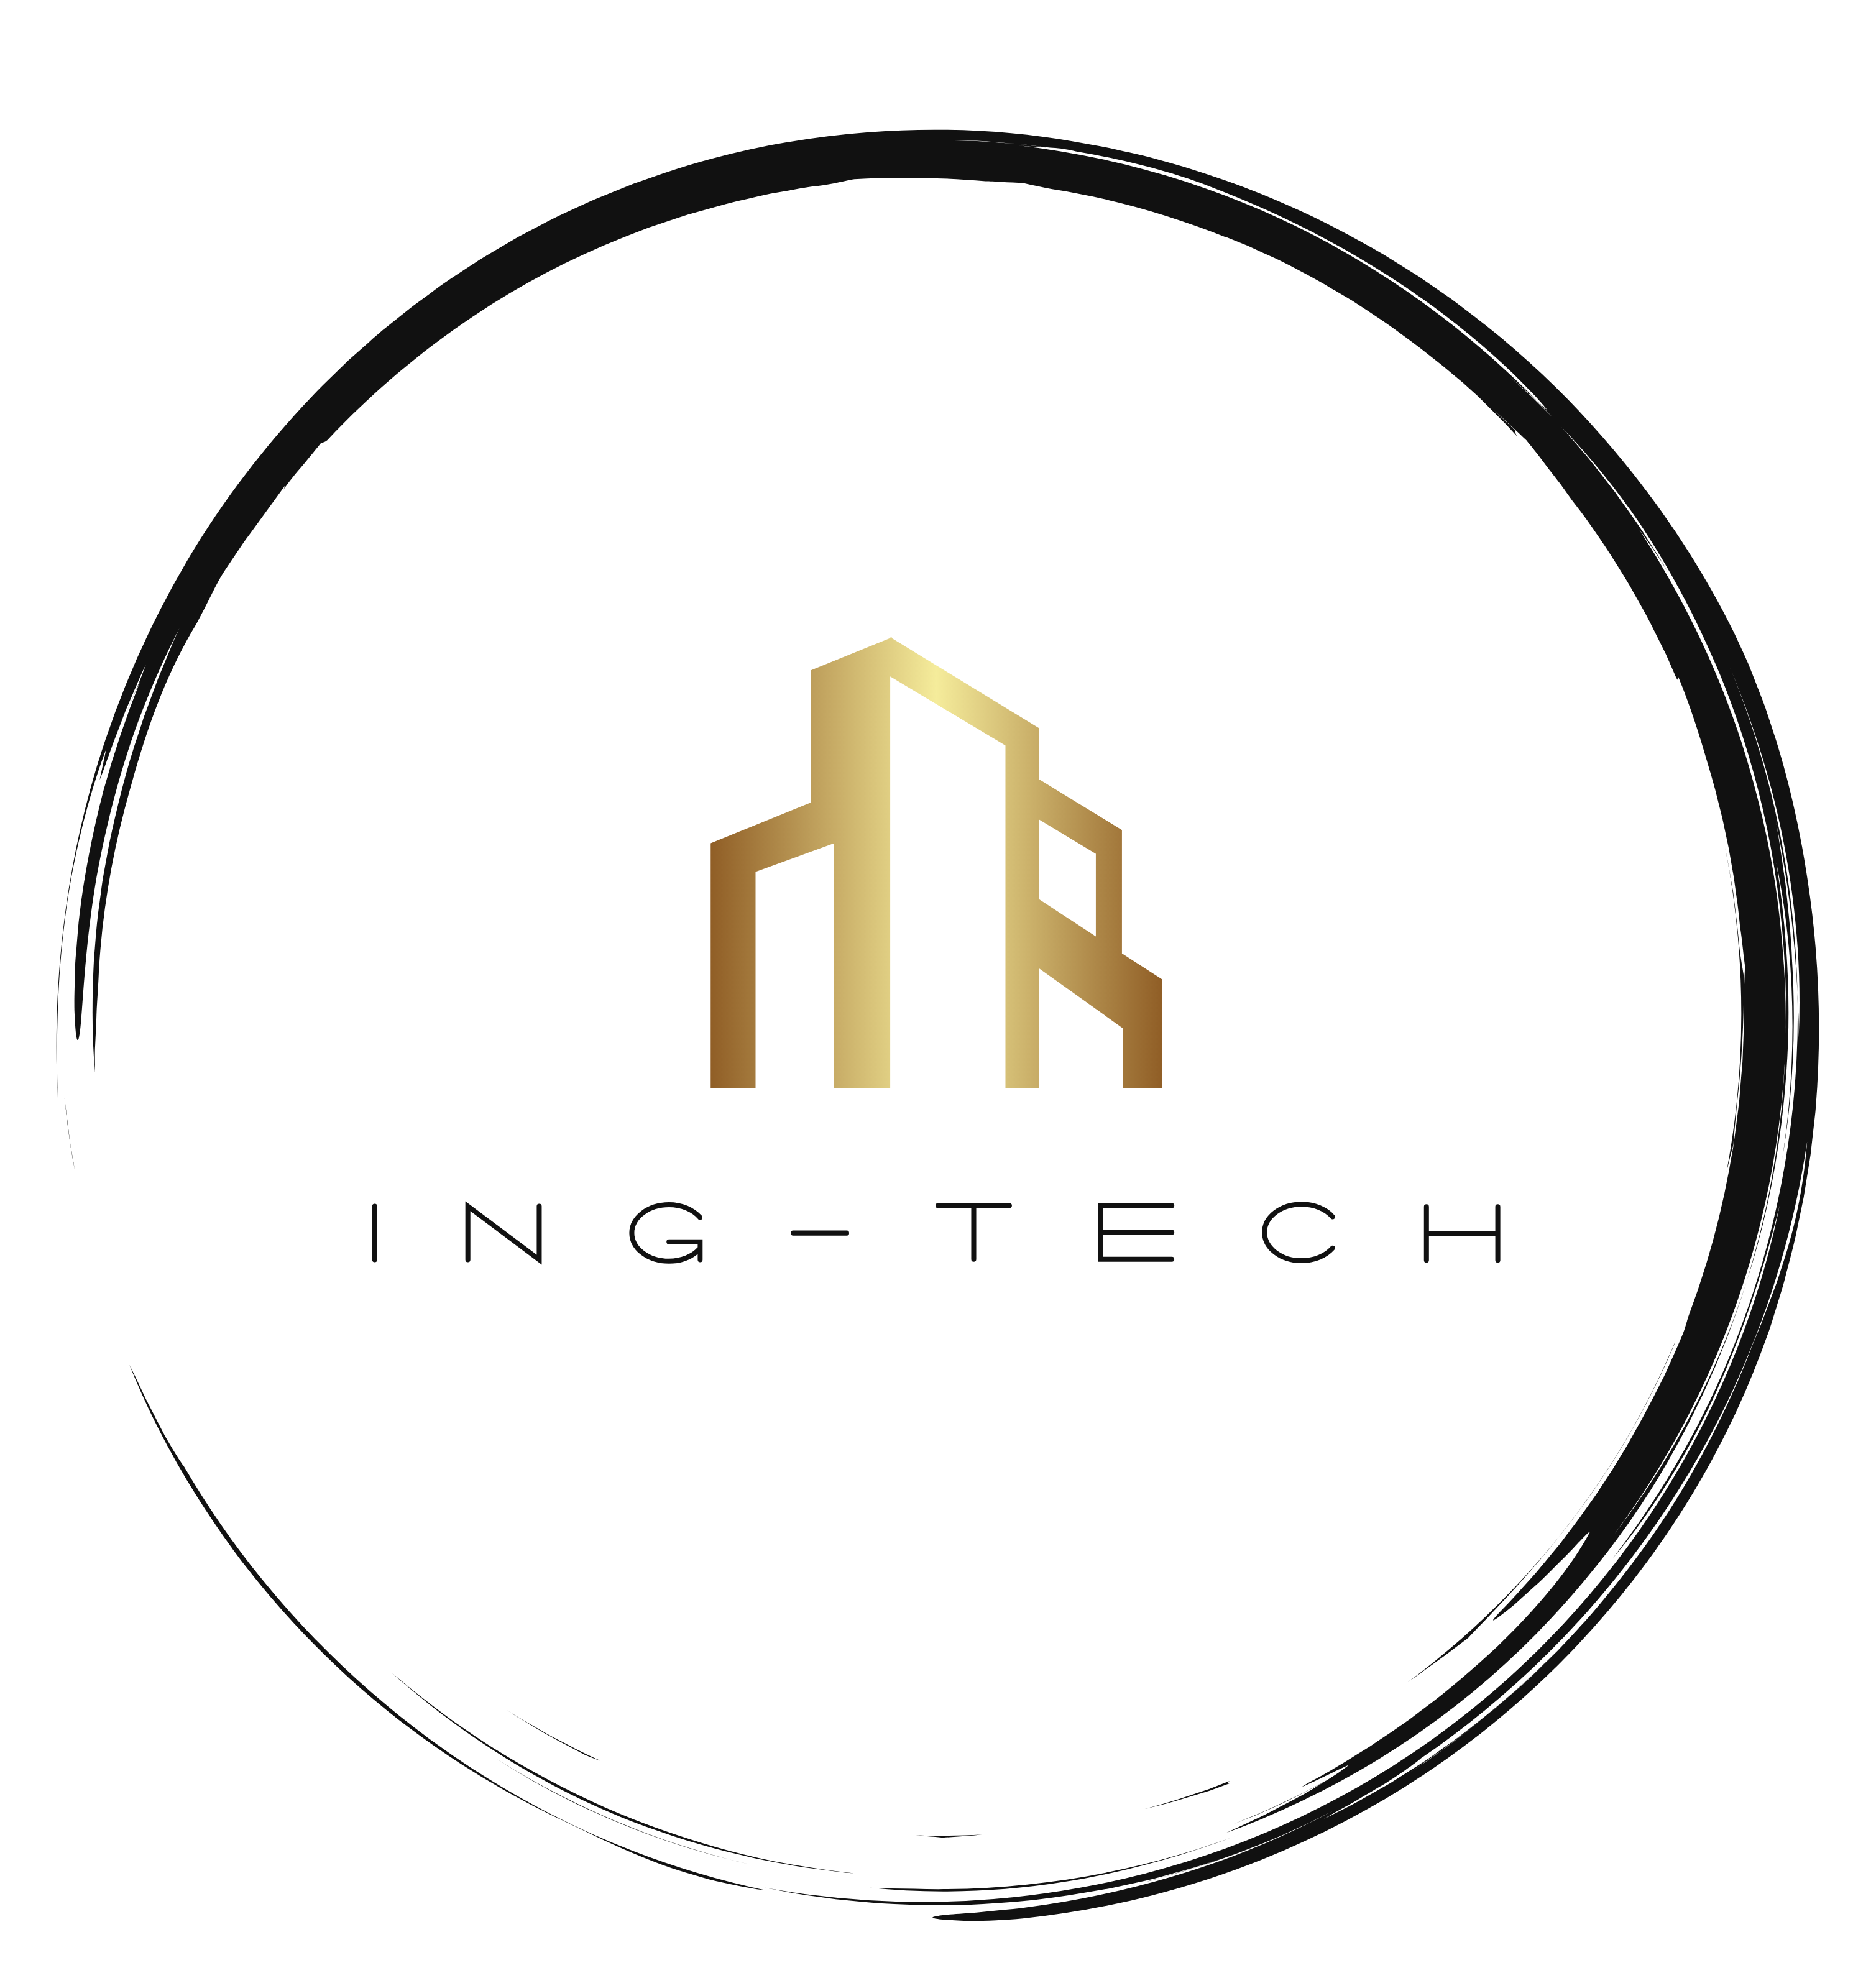 Ing-Tech Schweiz GmbH